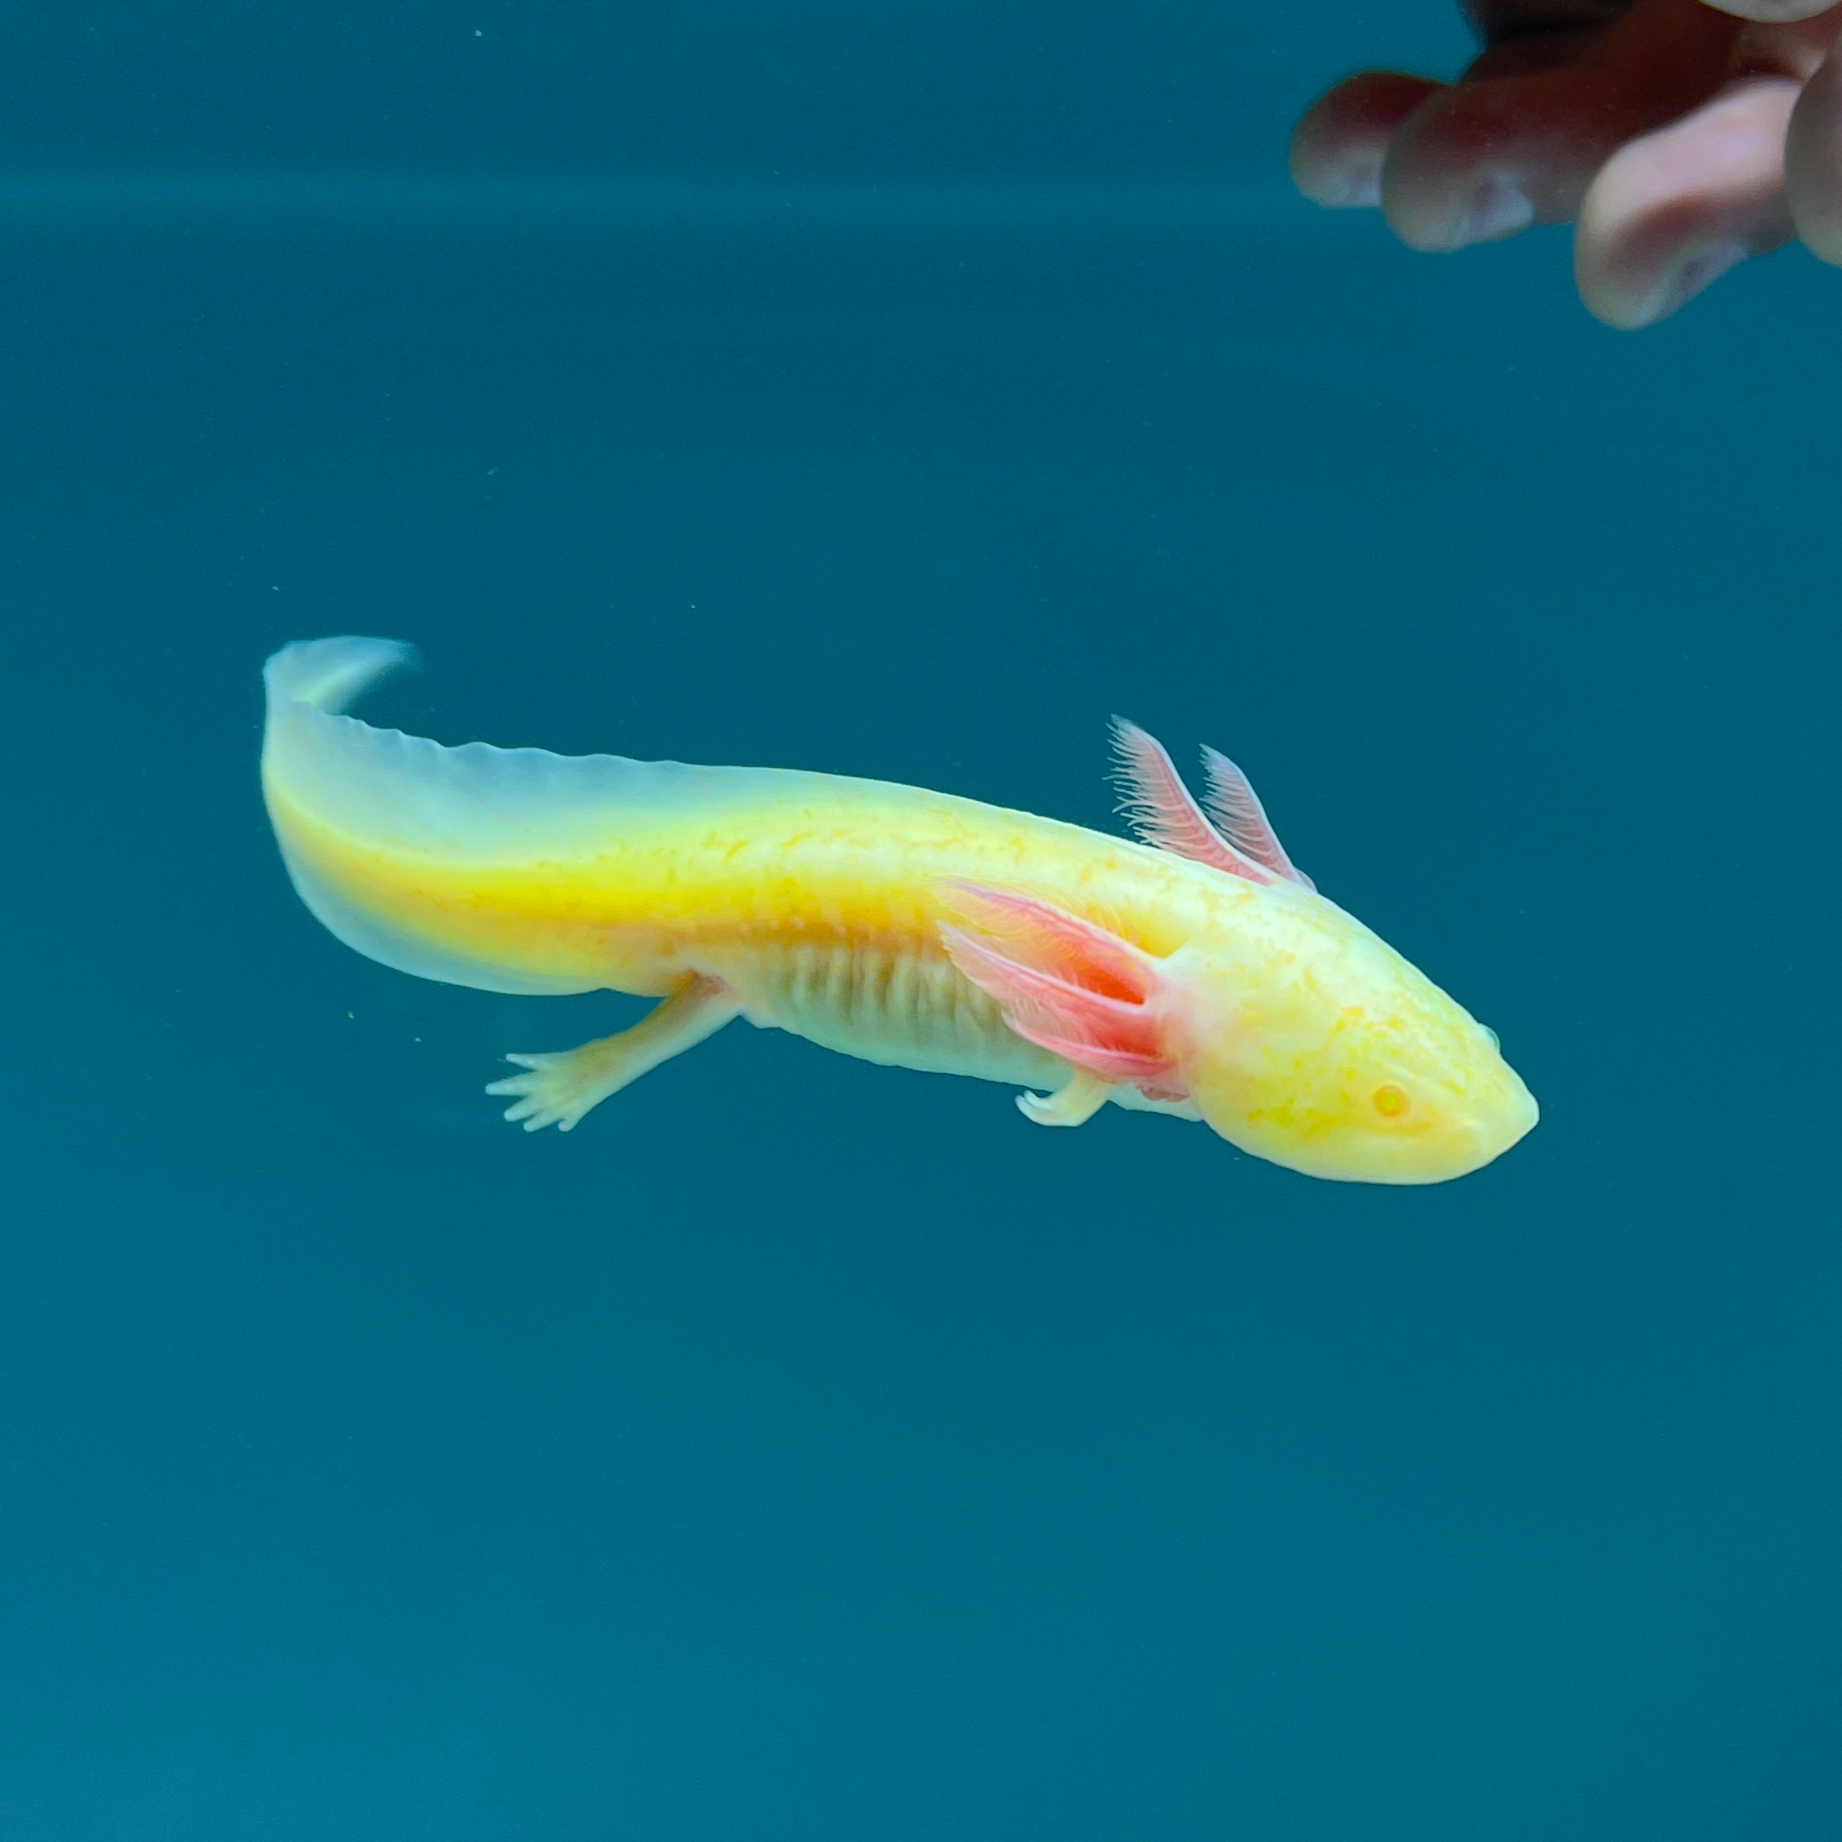 yellow axolotl